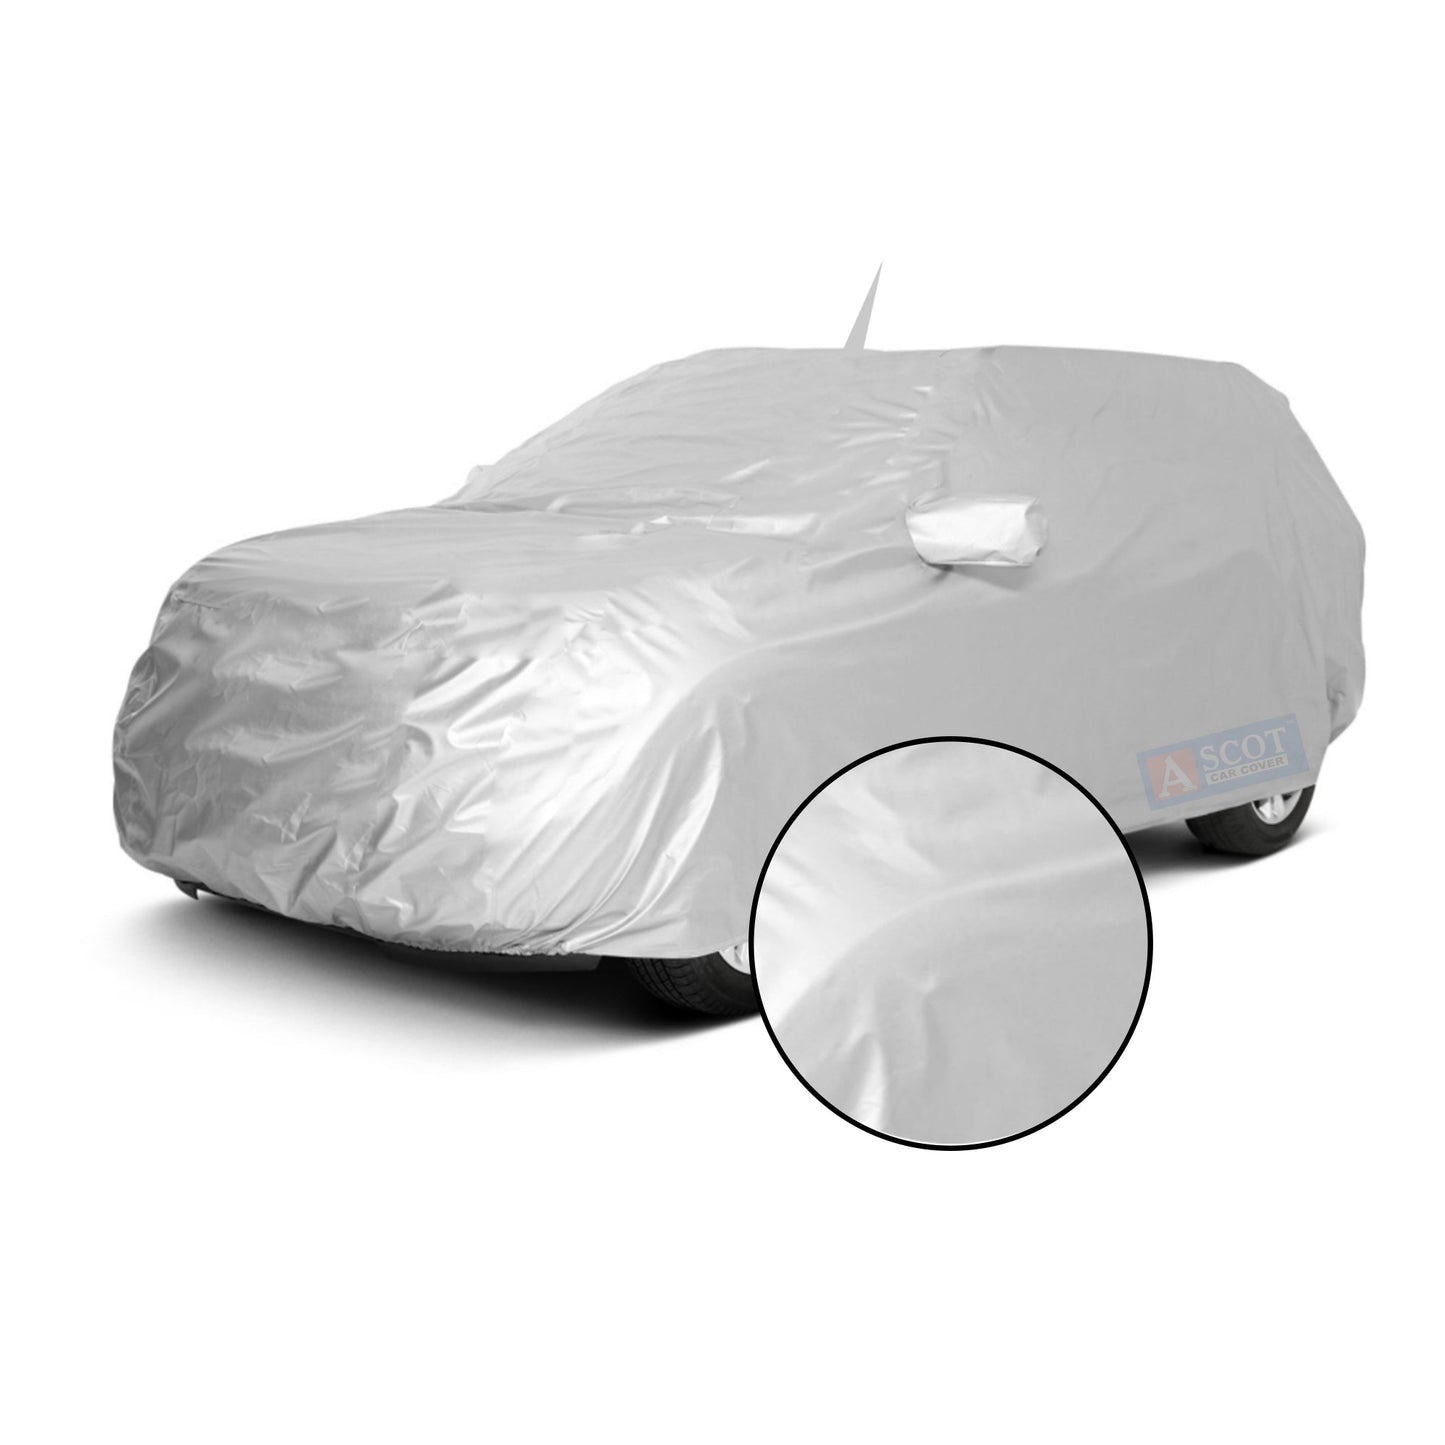 Ascot Volkswagen Vento Matt Edition Car Body Cover Dust Proof, Trippel Stitched